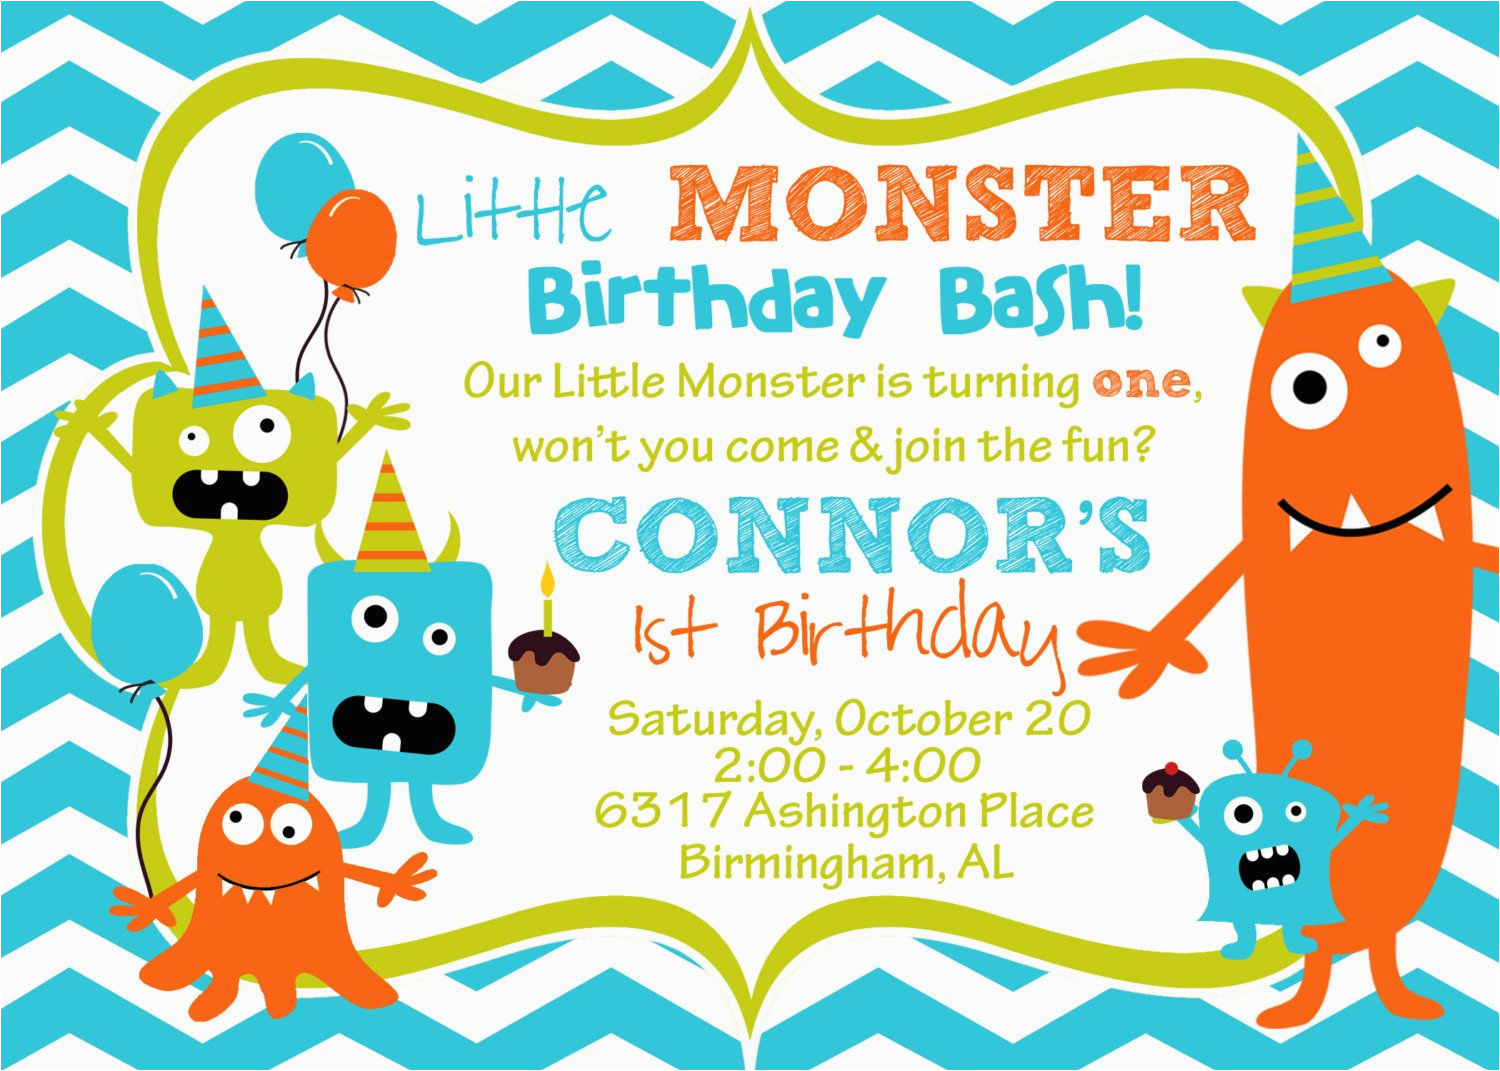 cupcake monster bash birthday party